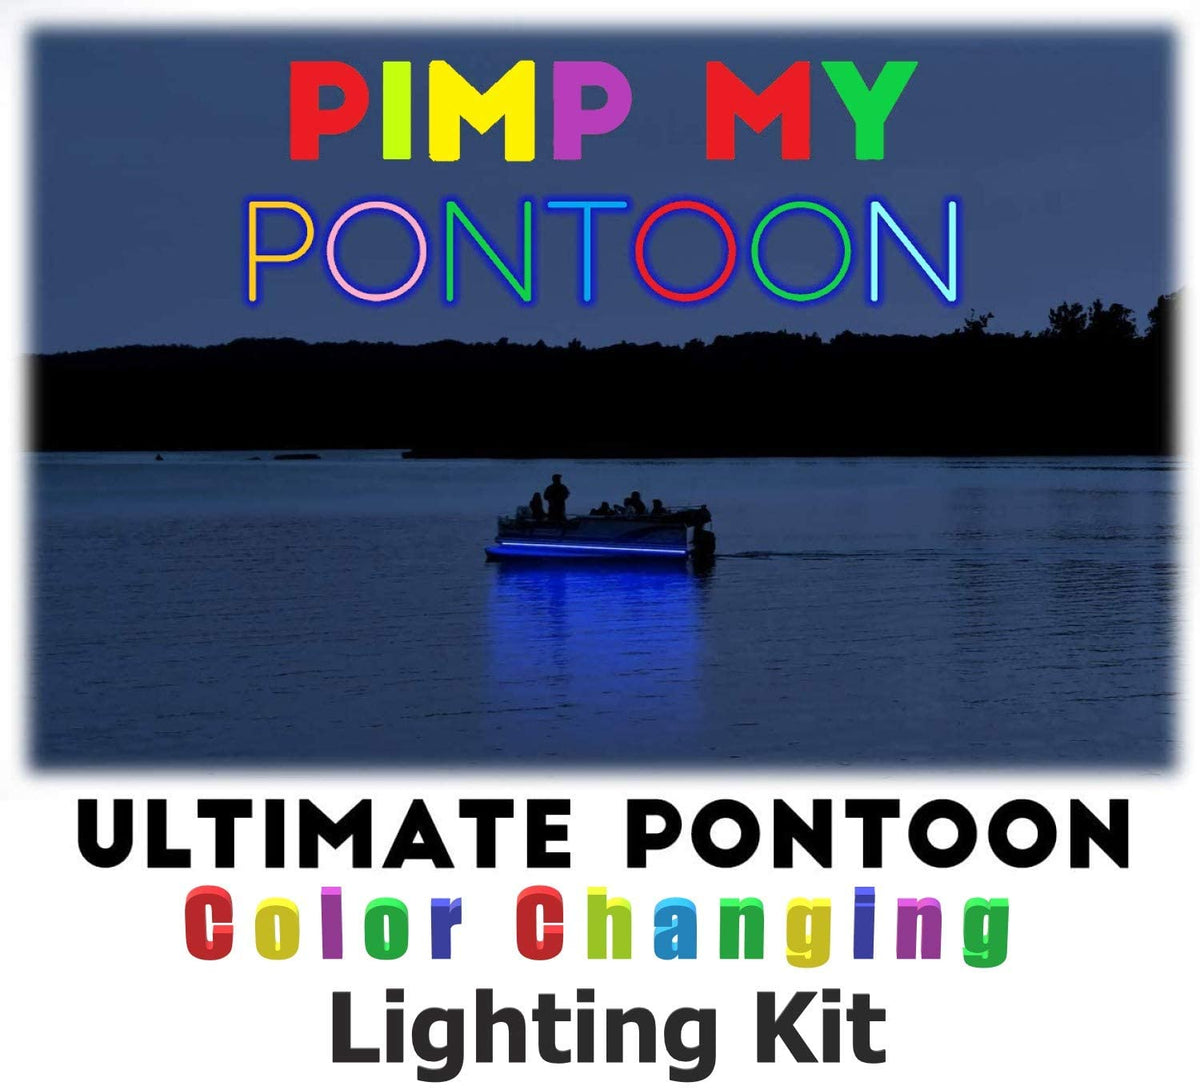 Pimp My Pontoon Multi-Color LED Under Deck Lighting DIY Complete Kit 30000 Lumens, Includes Bonus Red &amp; Green Navigation Lights Pimp My Pontoon Green Blob Outdoors 19ft per roll 